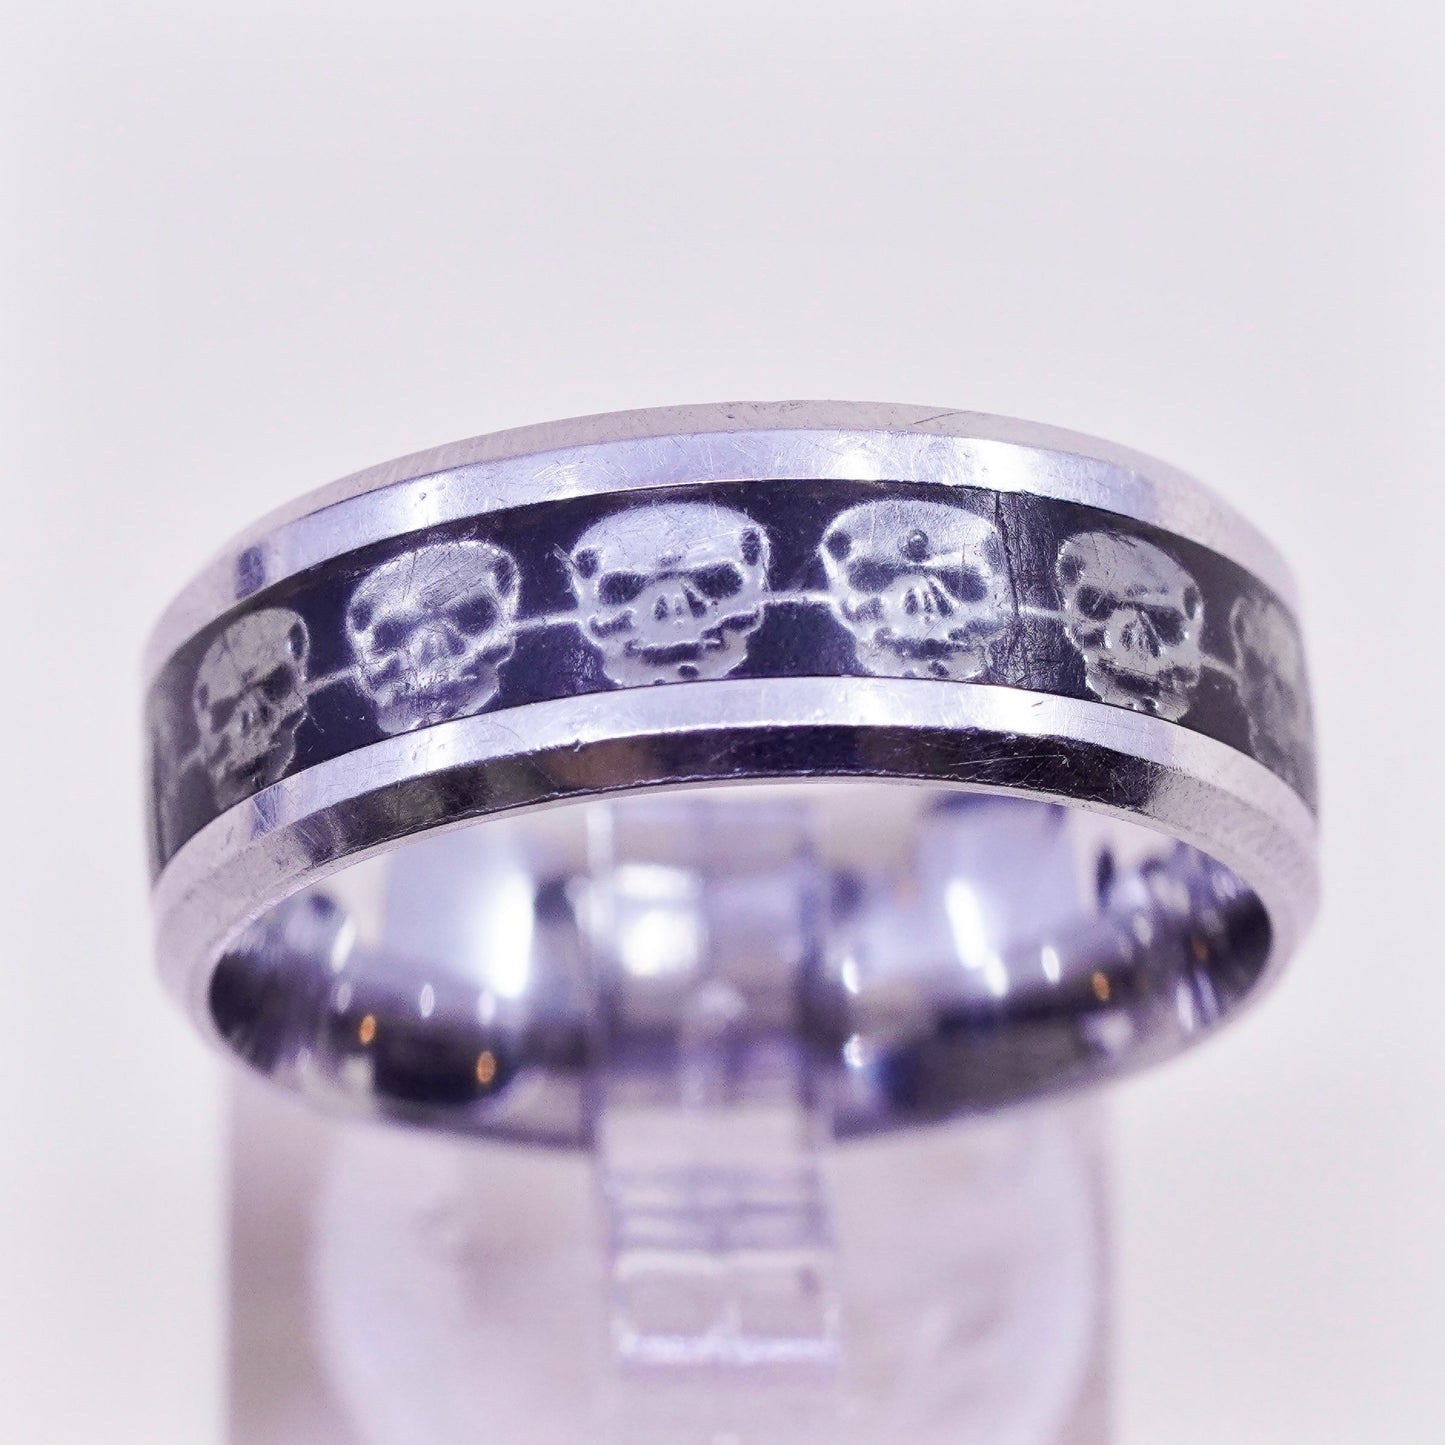 Size 10.5, Vintage silver tone ring, men’s band embossed skull skeleton